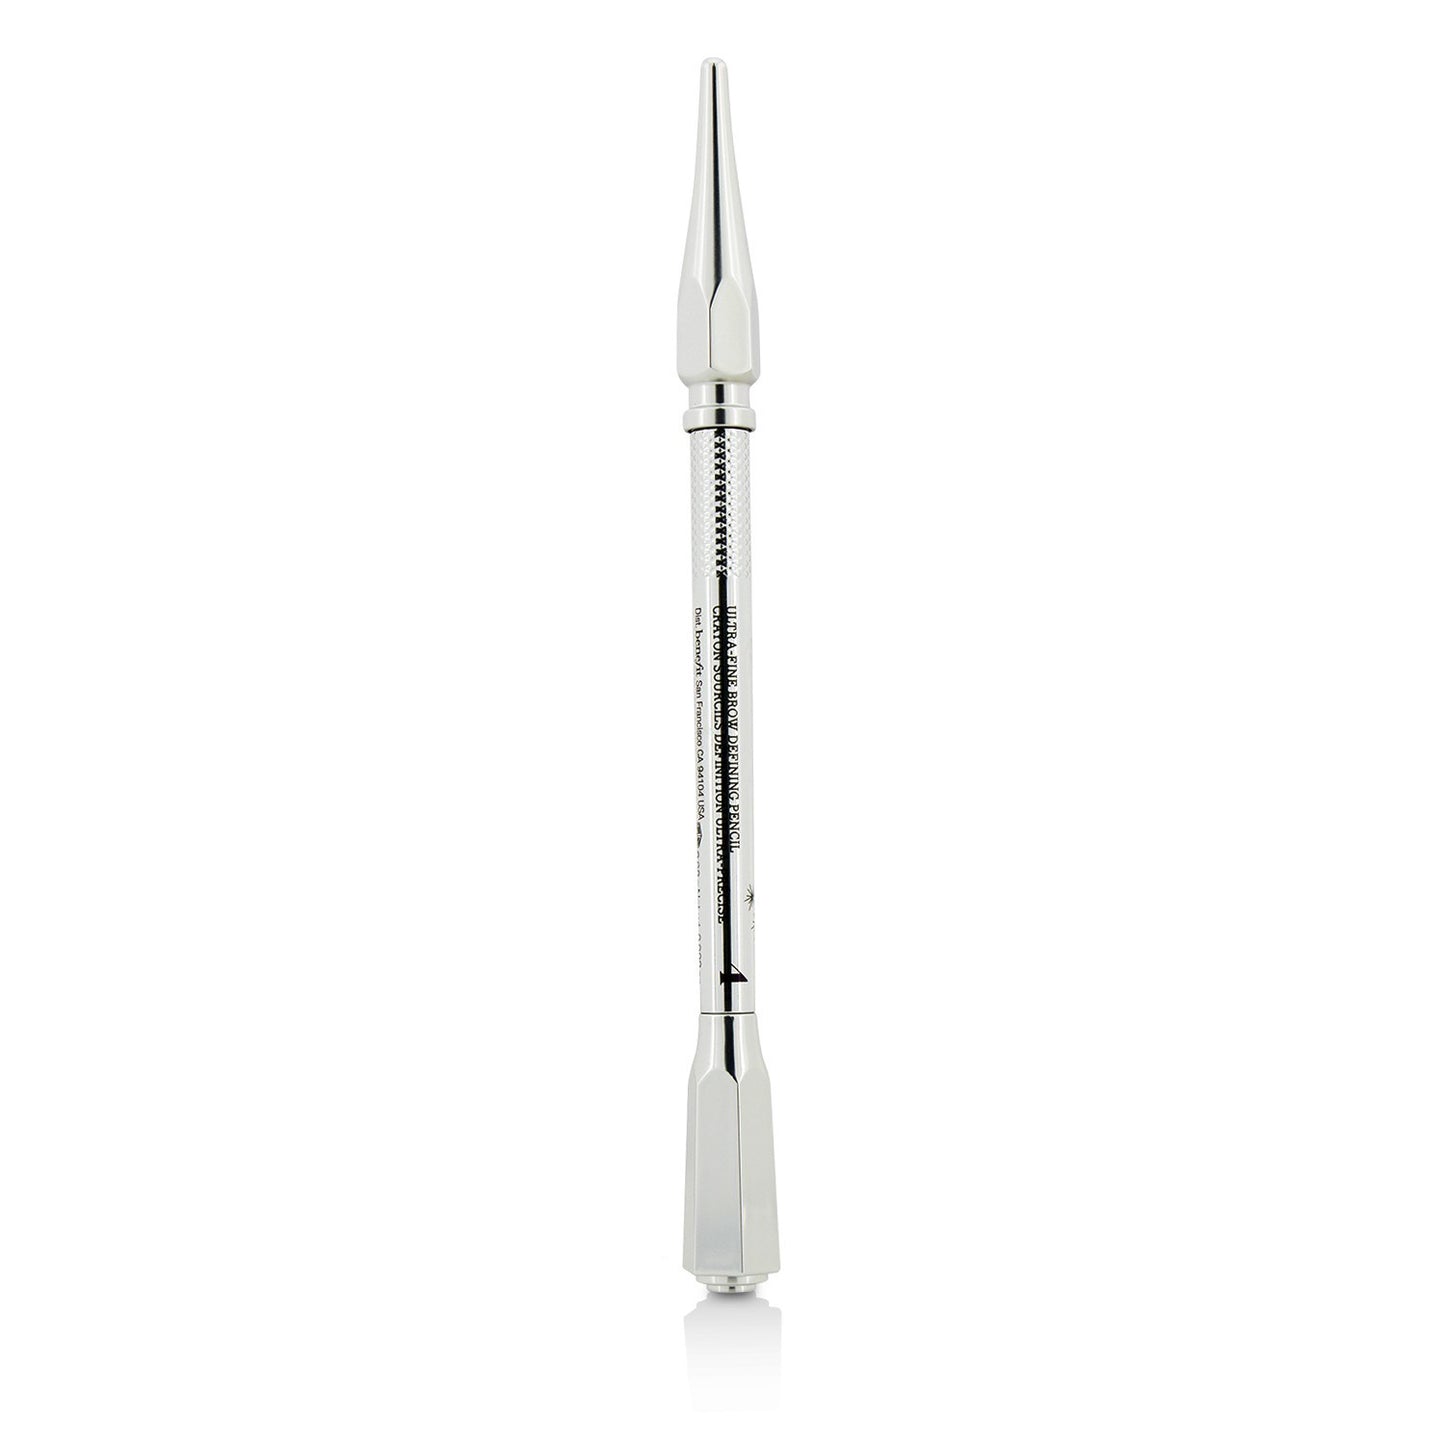 BENEFIT - Precisely My Brow Pencil (Ultra Fine Brow Defining Pencil) - # 4 (Medium) BM22 / 071330 0.08g/0.002oz